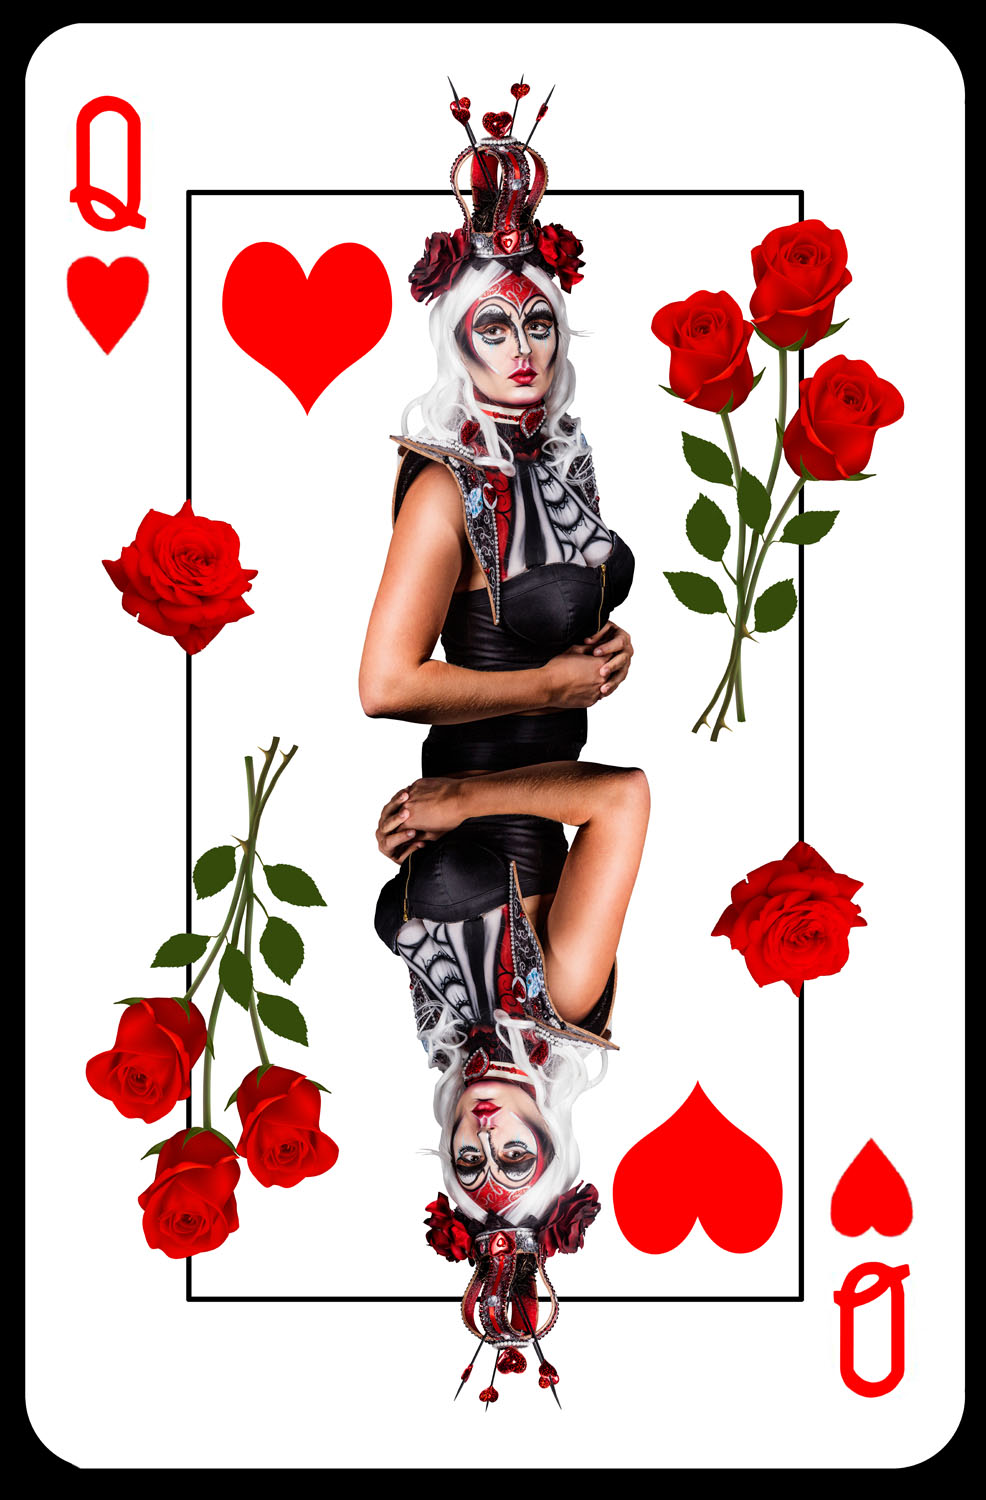 Queen of Hearts card_FINAL_V2.jpg